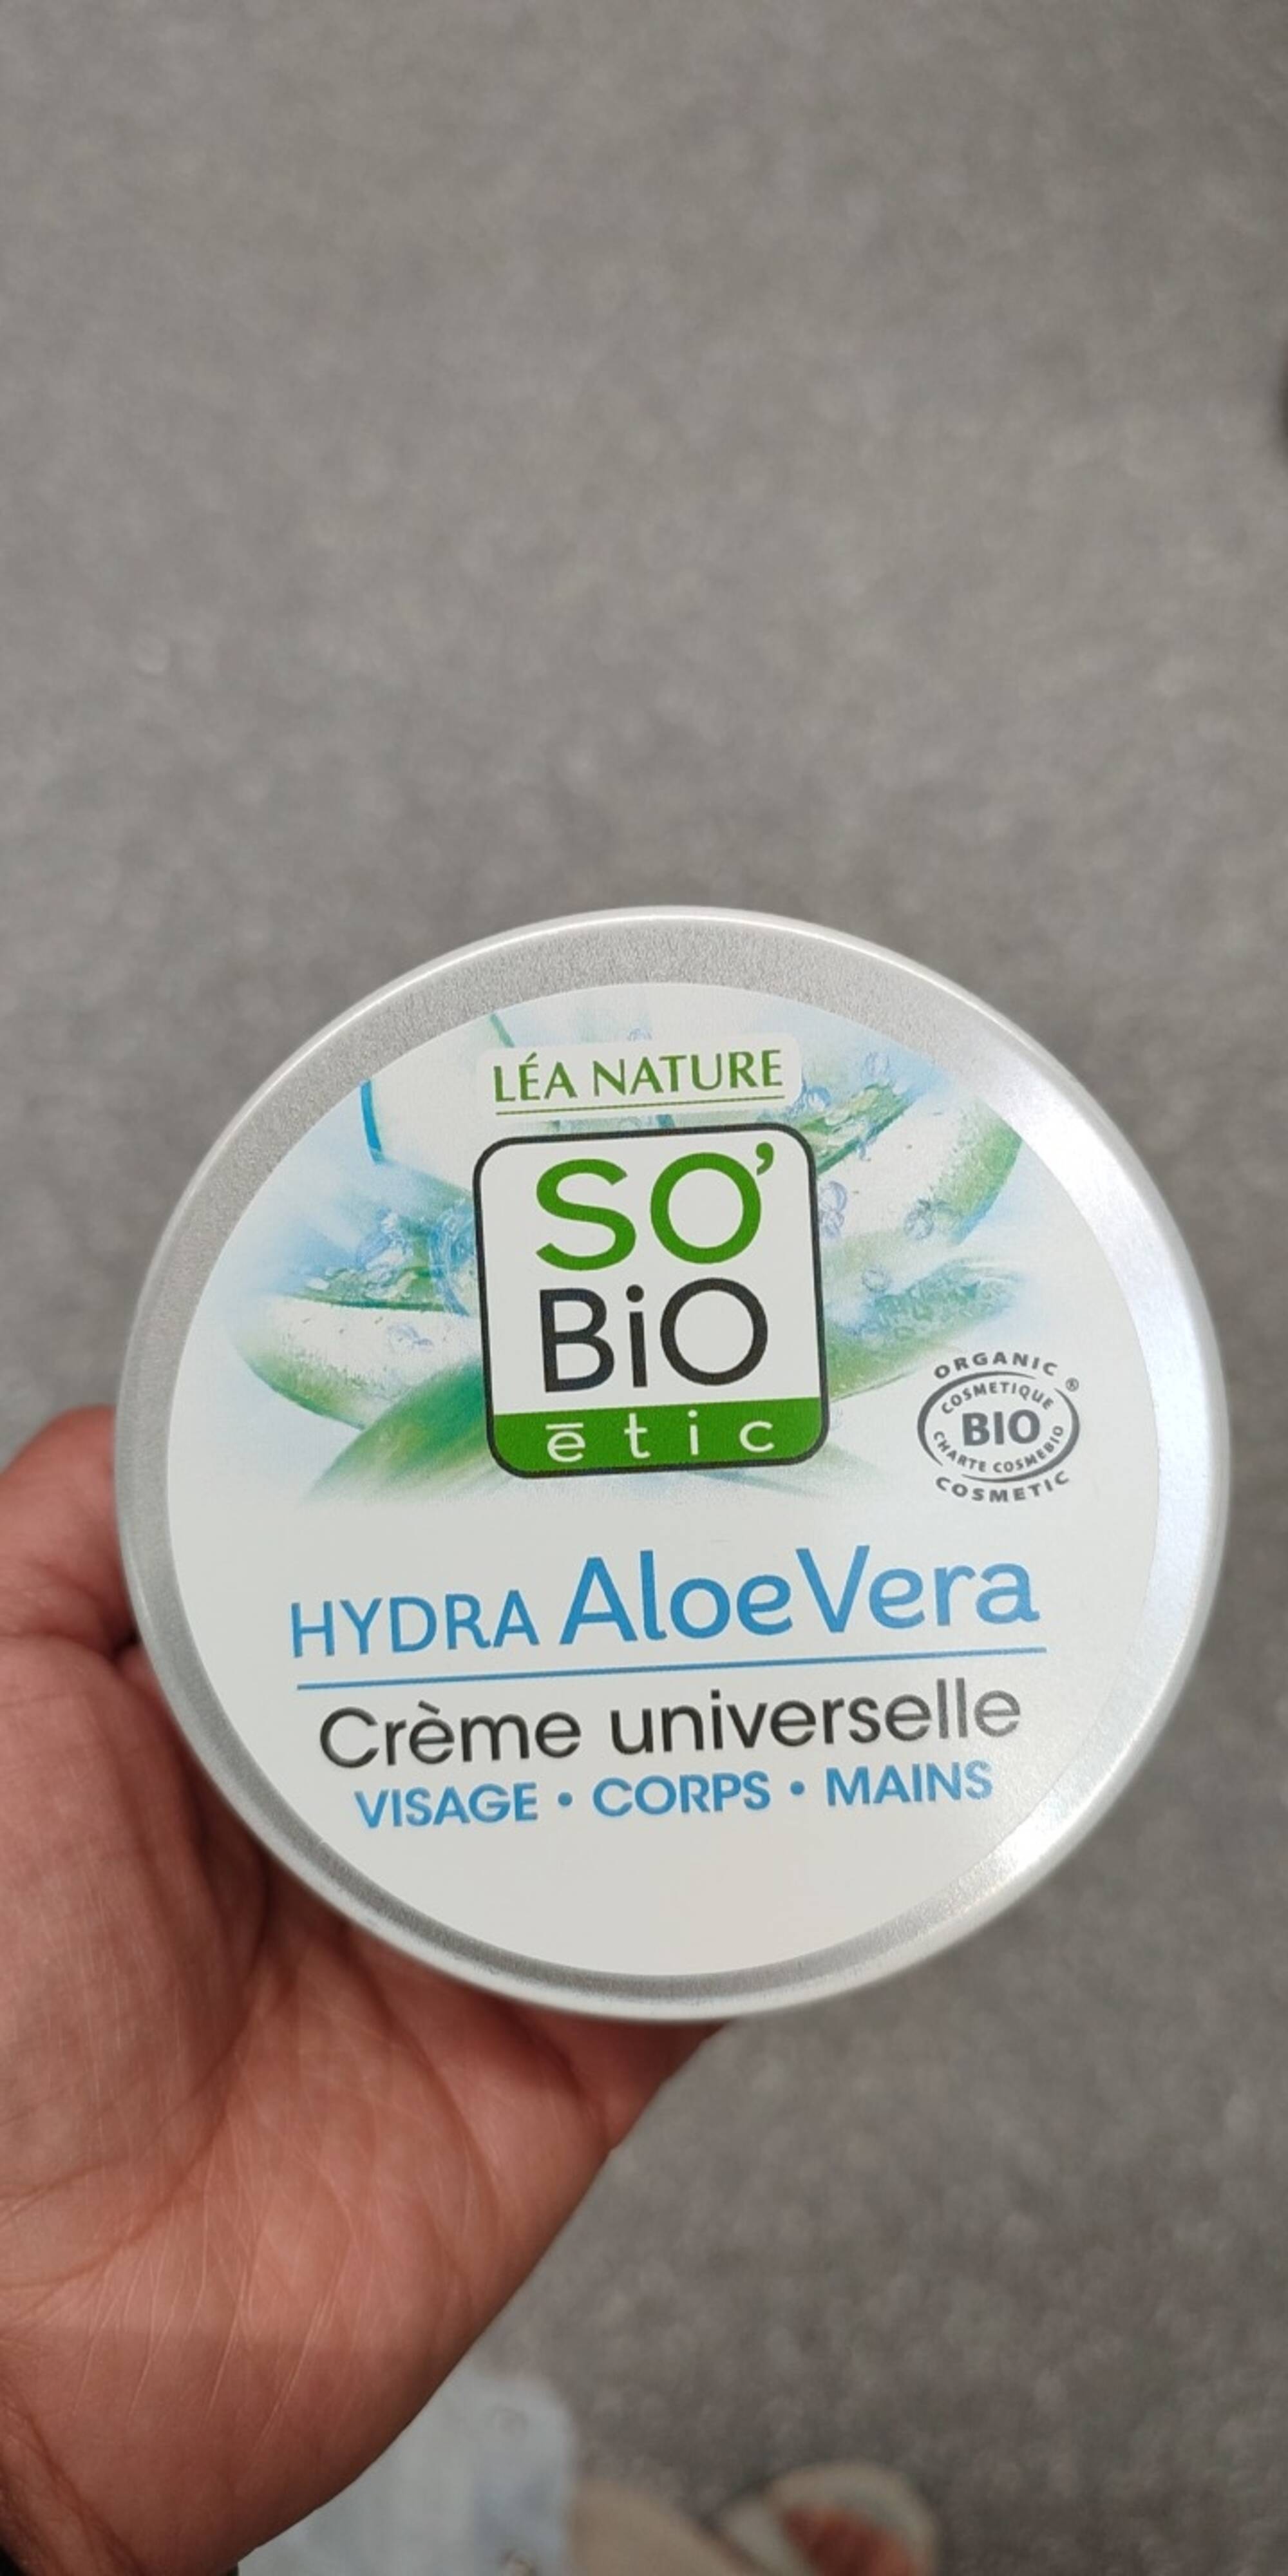 SO'BIO ÉTIC - Hydra aloe vera - Crème universelle